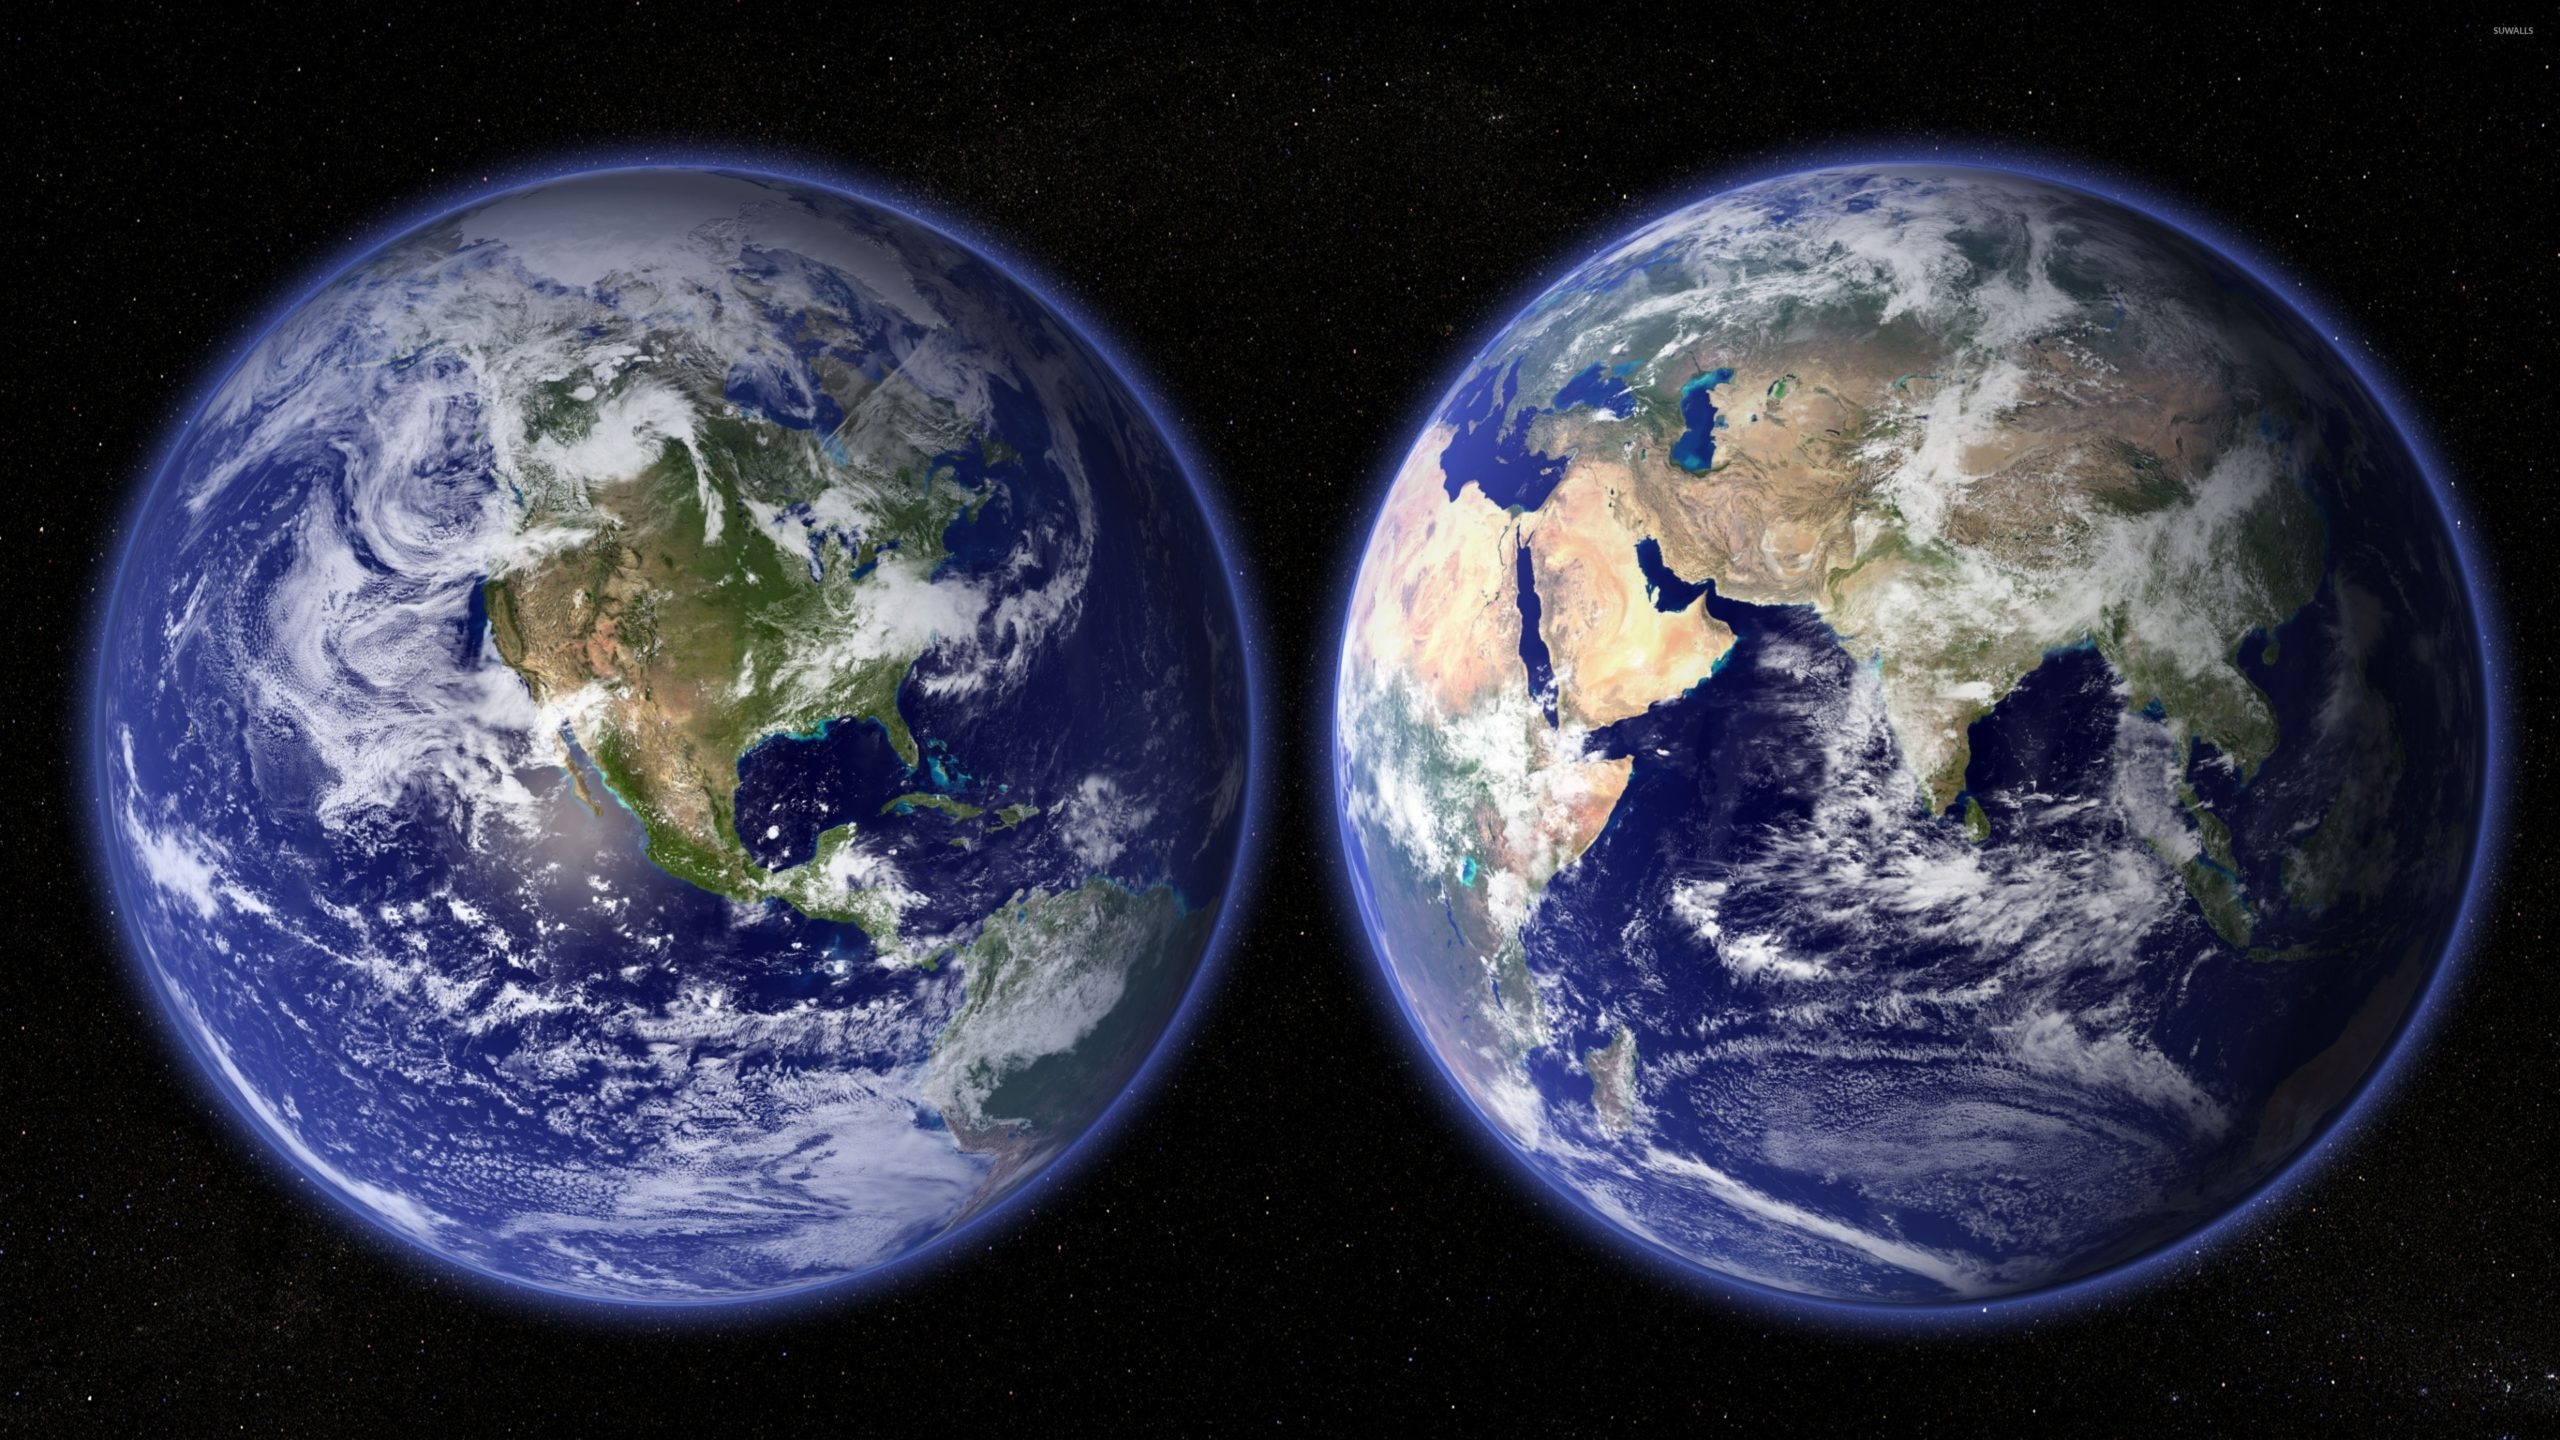 Different sides, Earth, 3840x2160 wallpaper, 2560x1440 HD Desktop